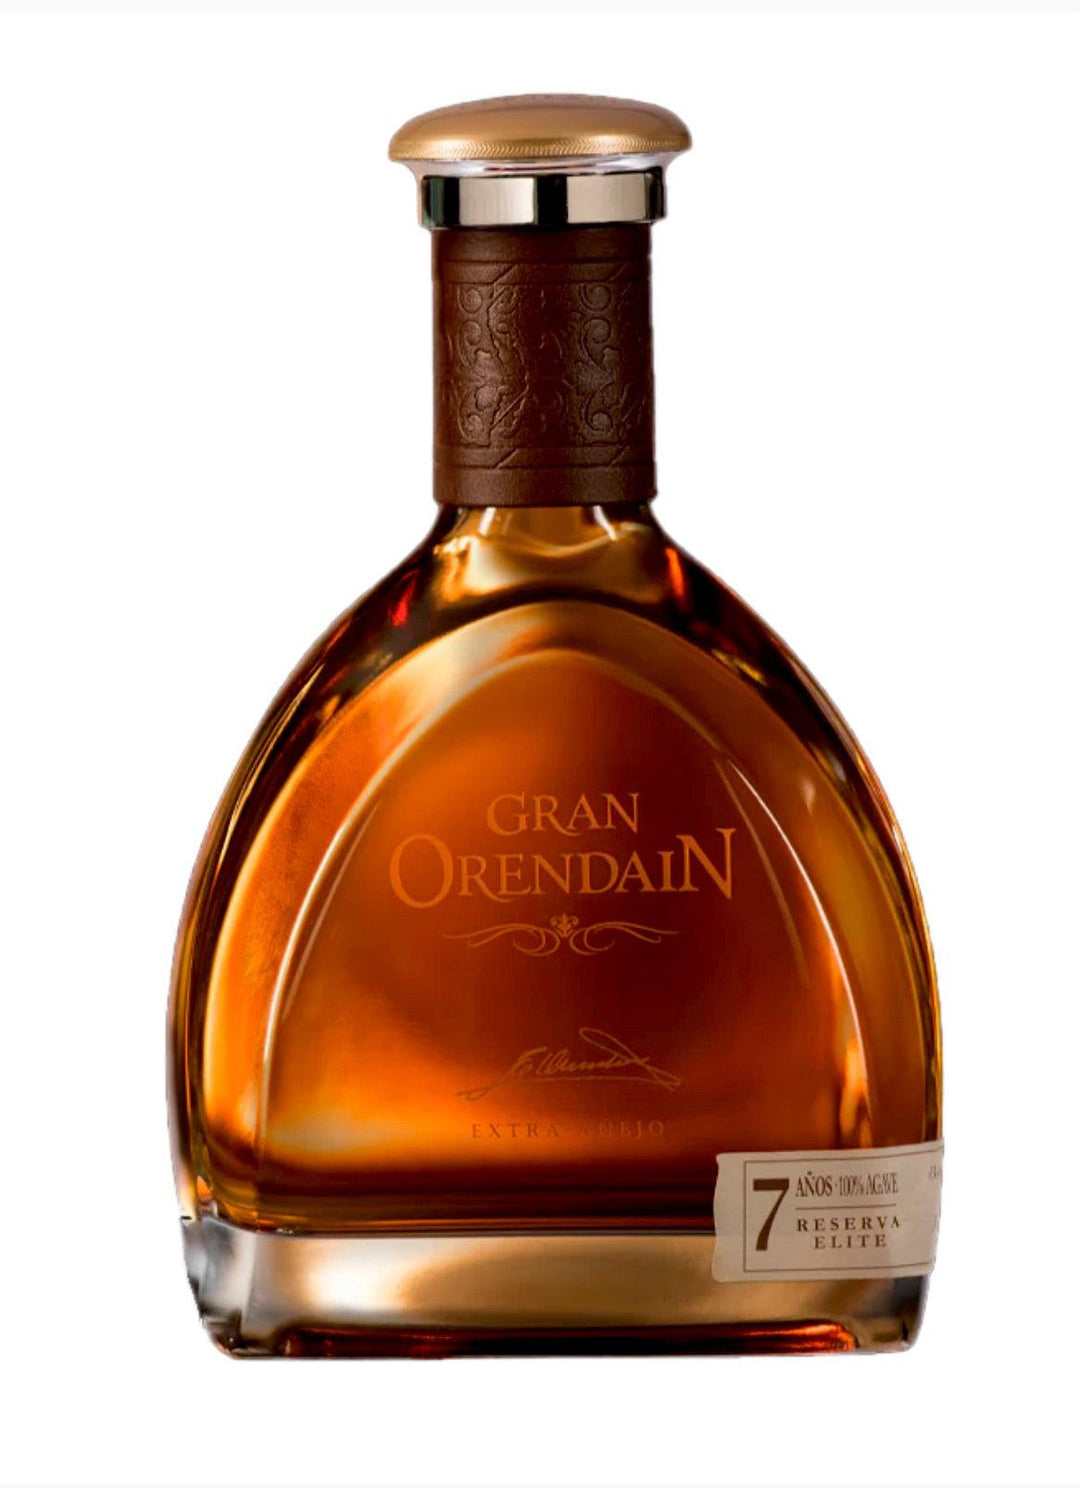 Gran Orendain Extra Anejo Reserva Elite Tequila 7 Years Old - Liquor Luxe